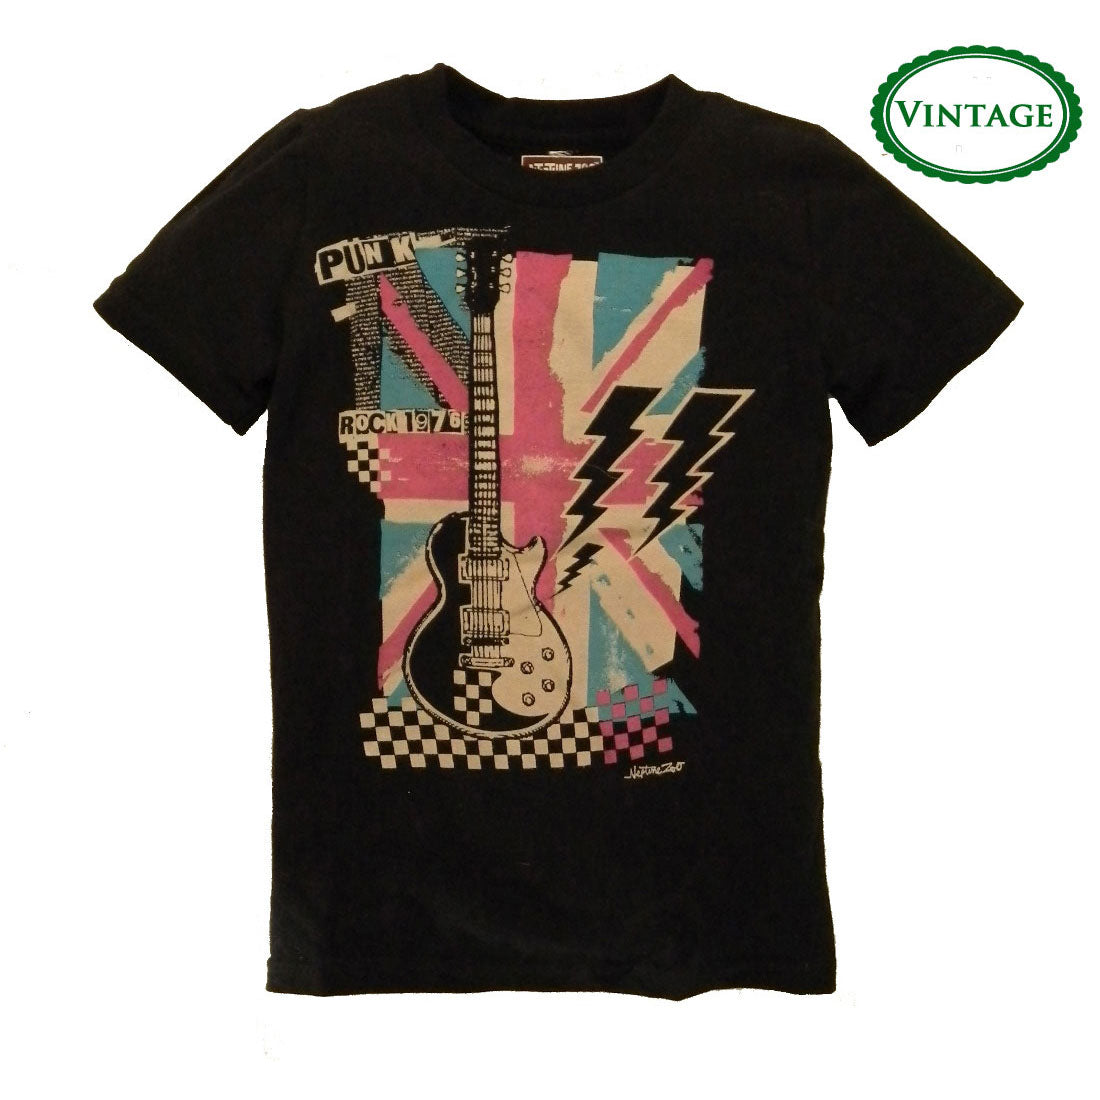 Boys Vintage Punk Rock Shirt by Neptune Zoo